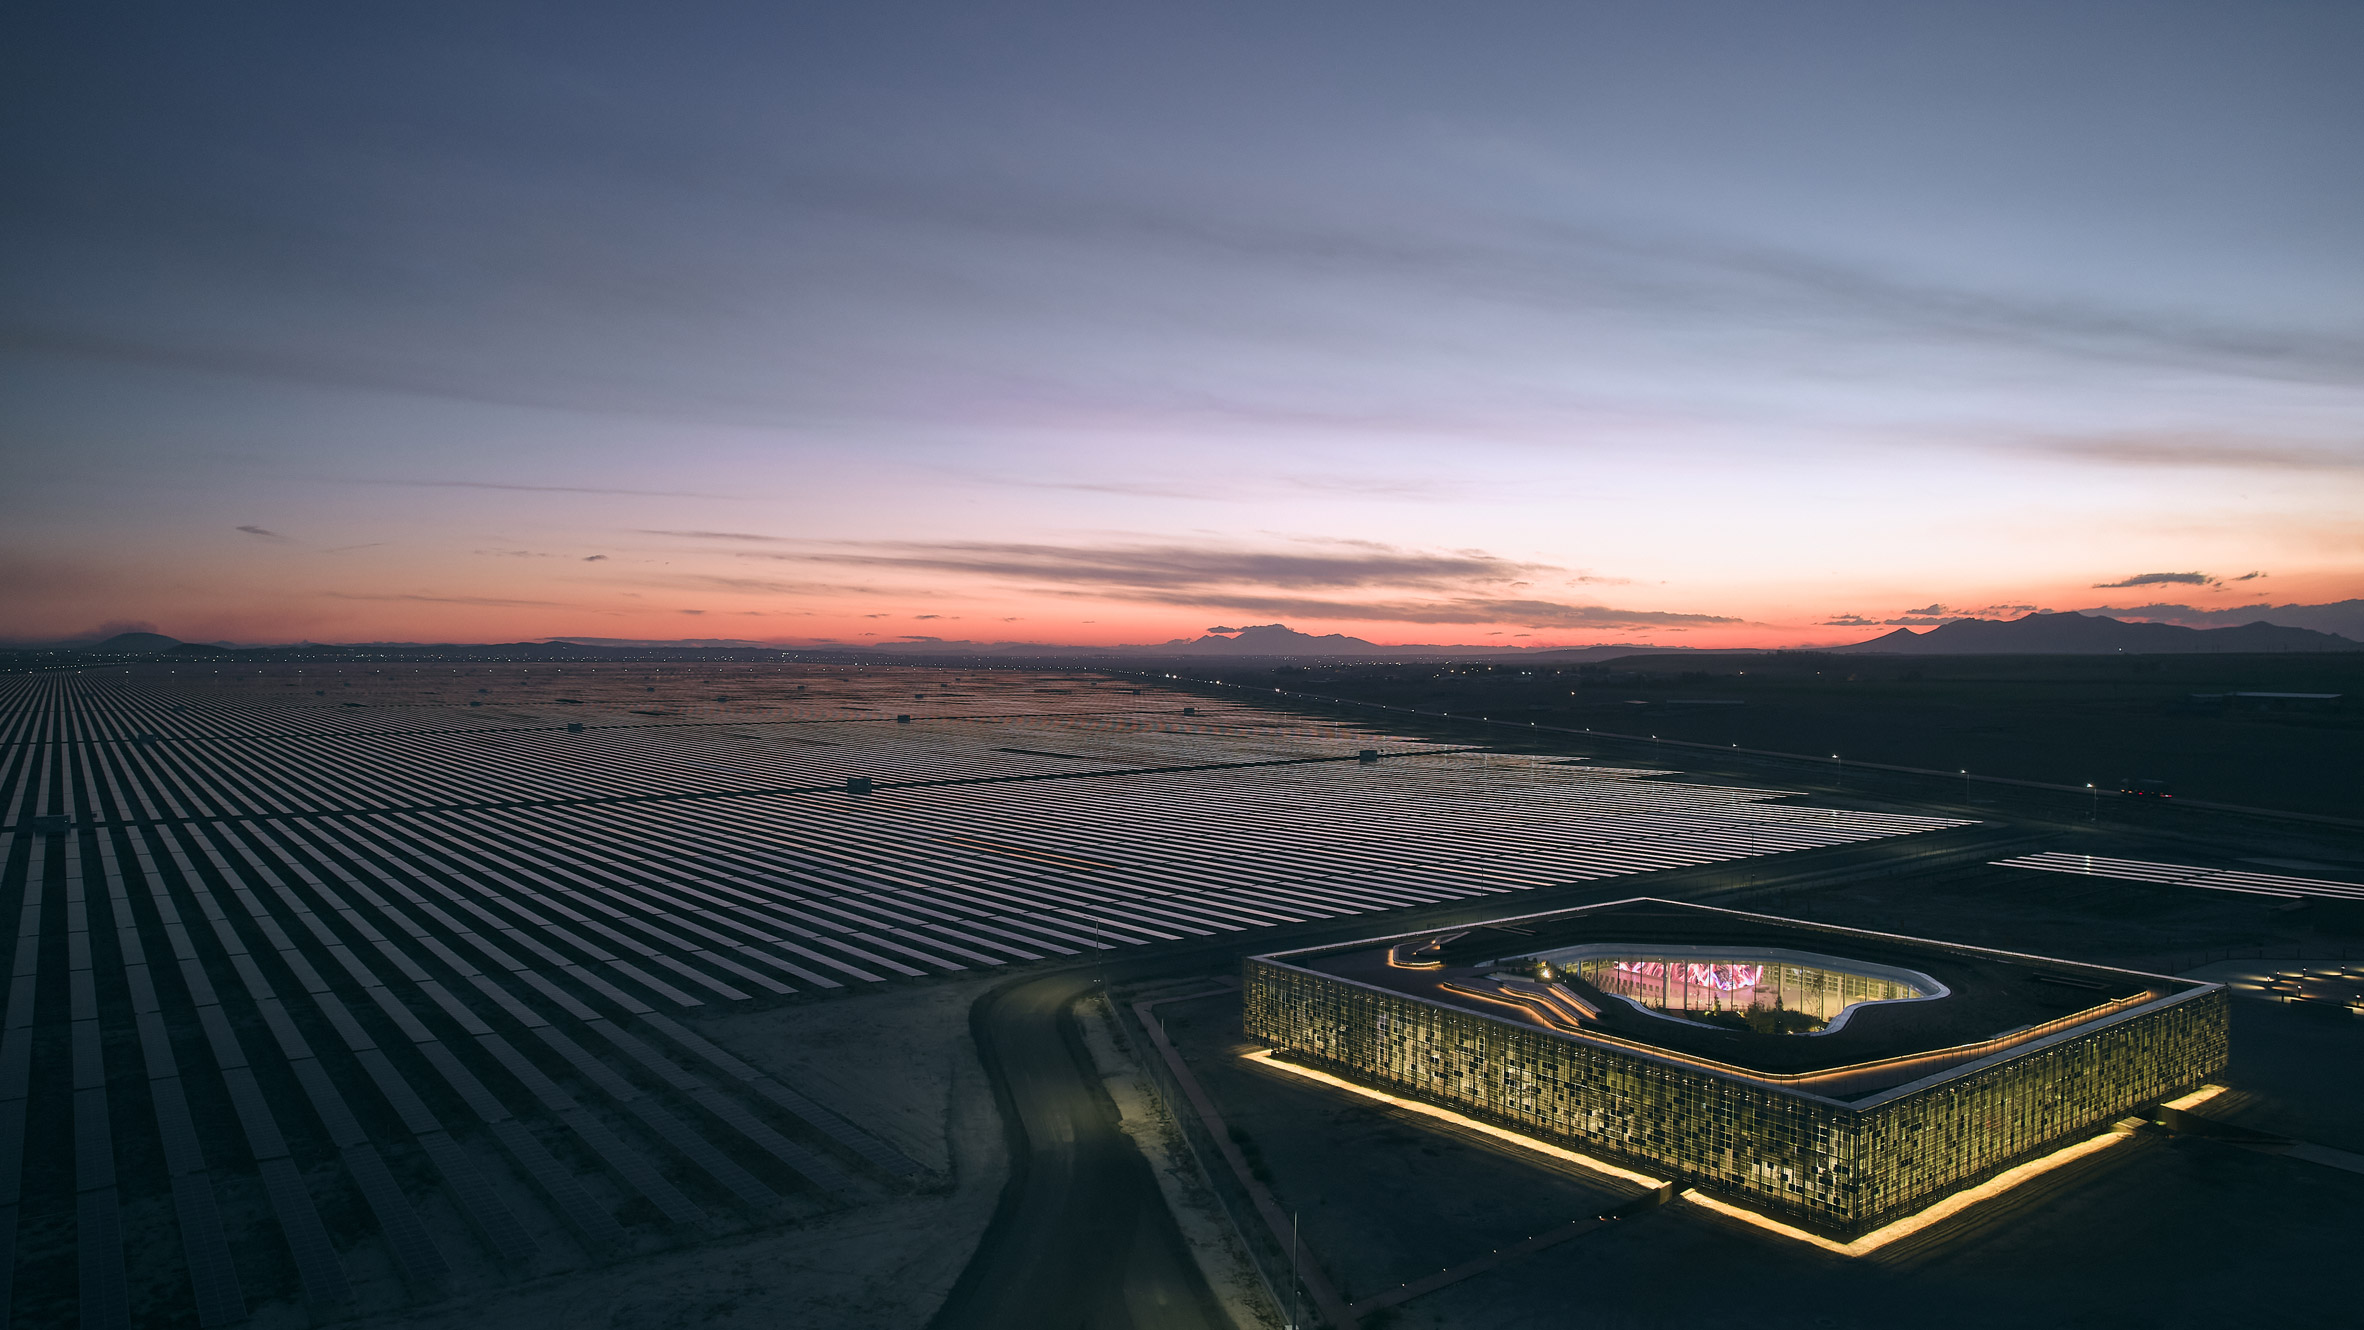 Night view of Central Control Building by Bilgin Architects amongst solar farm